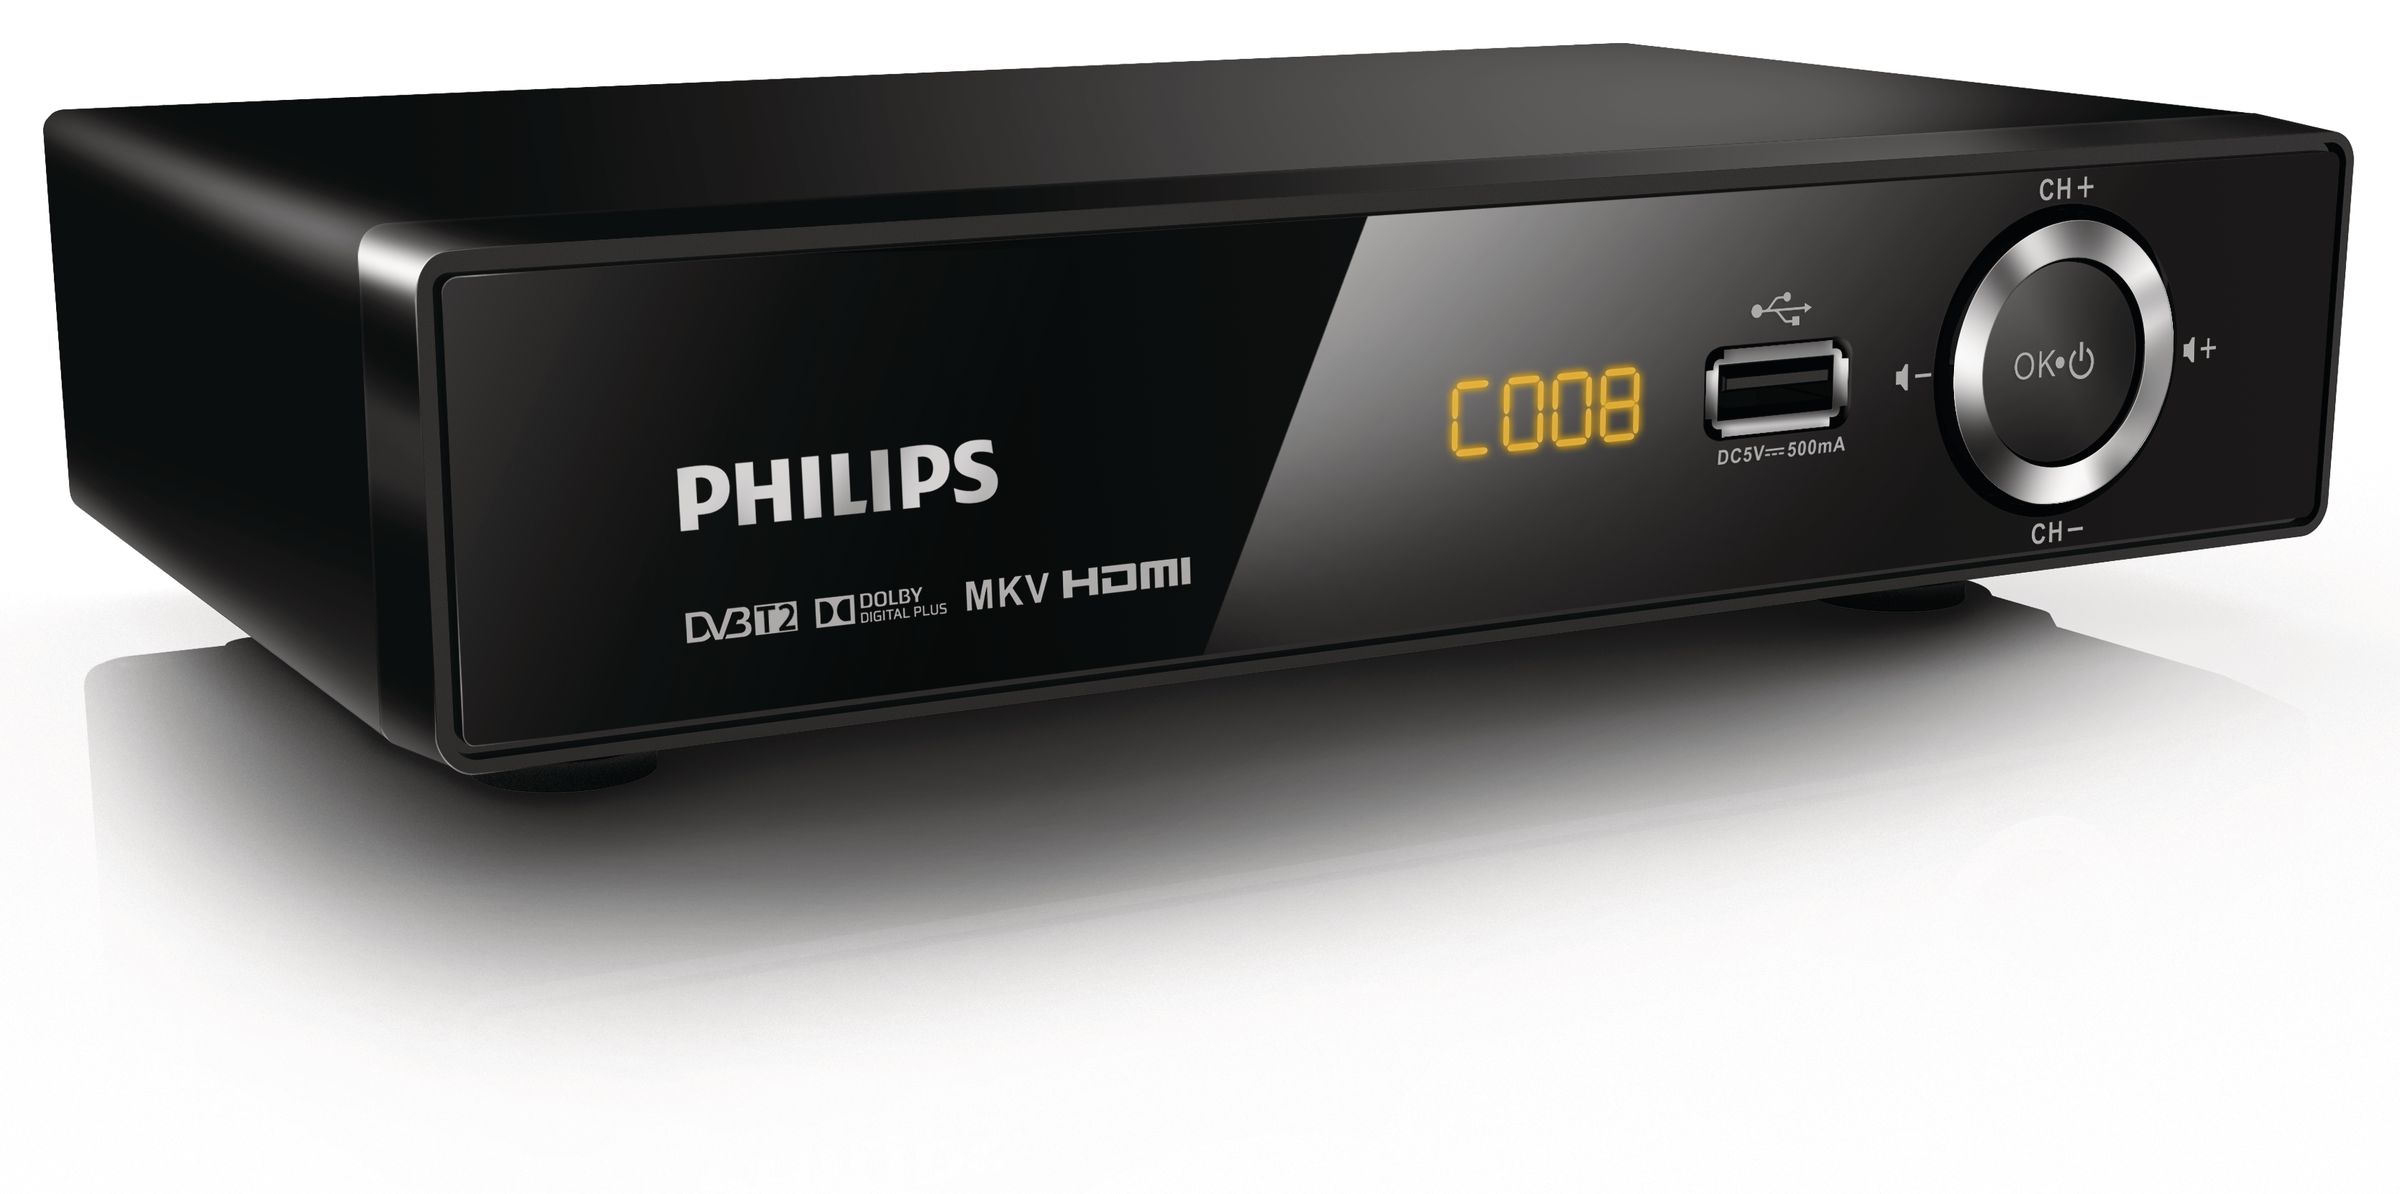 Филипс страна производитель. Медиаплеер Philips hmp2500t. Медиаплеер Philips hmp2500t 12. DVB-t2 приставка Philips hmp2500. Ресивер DVB-t2 Филипс.